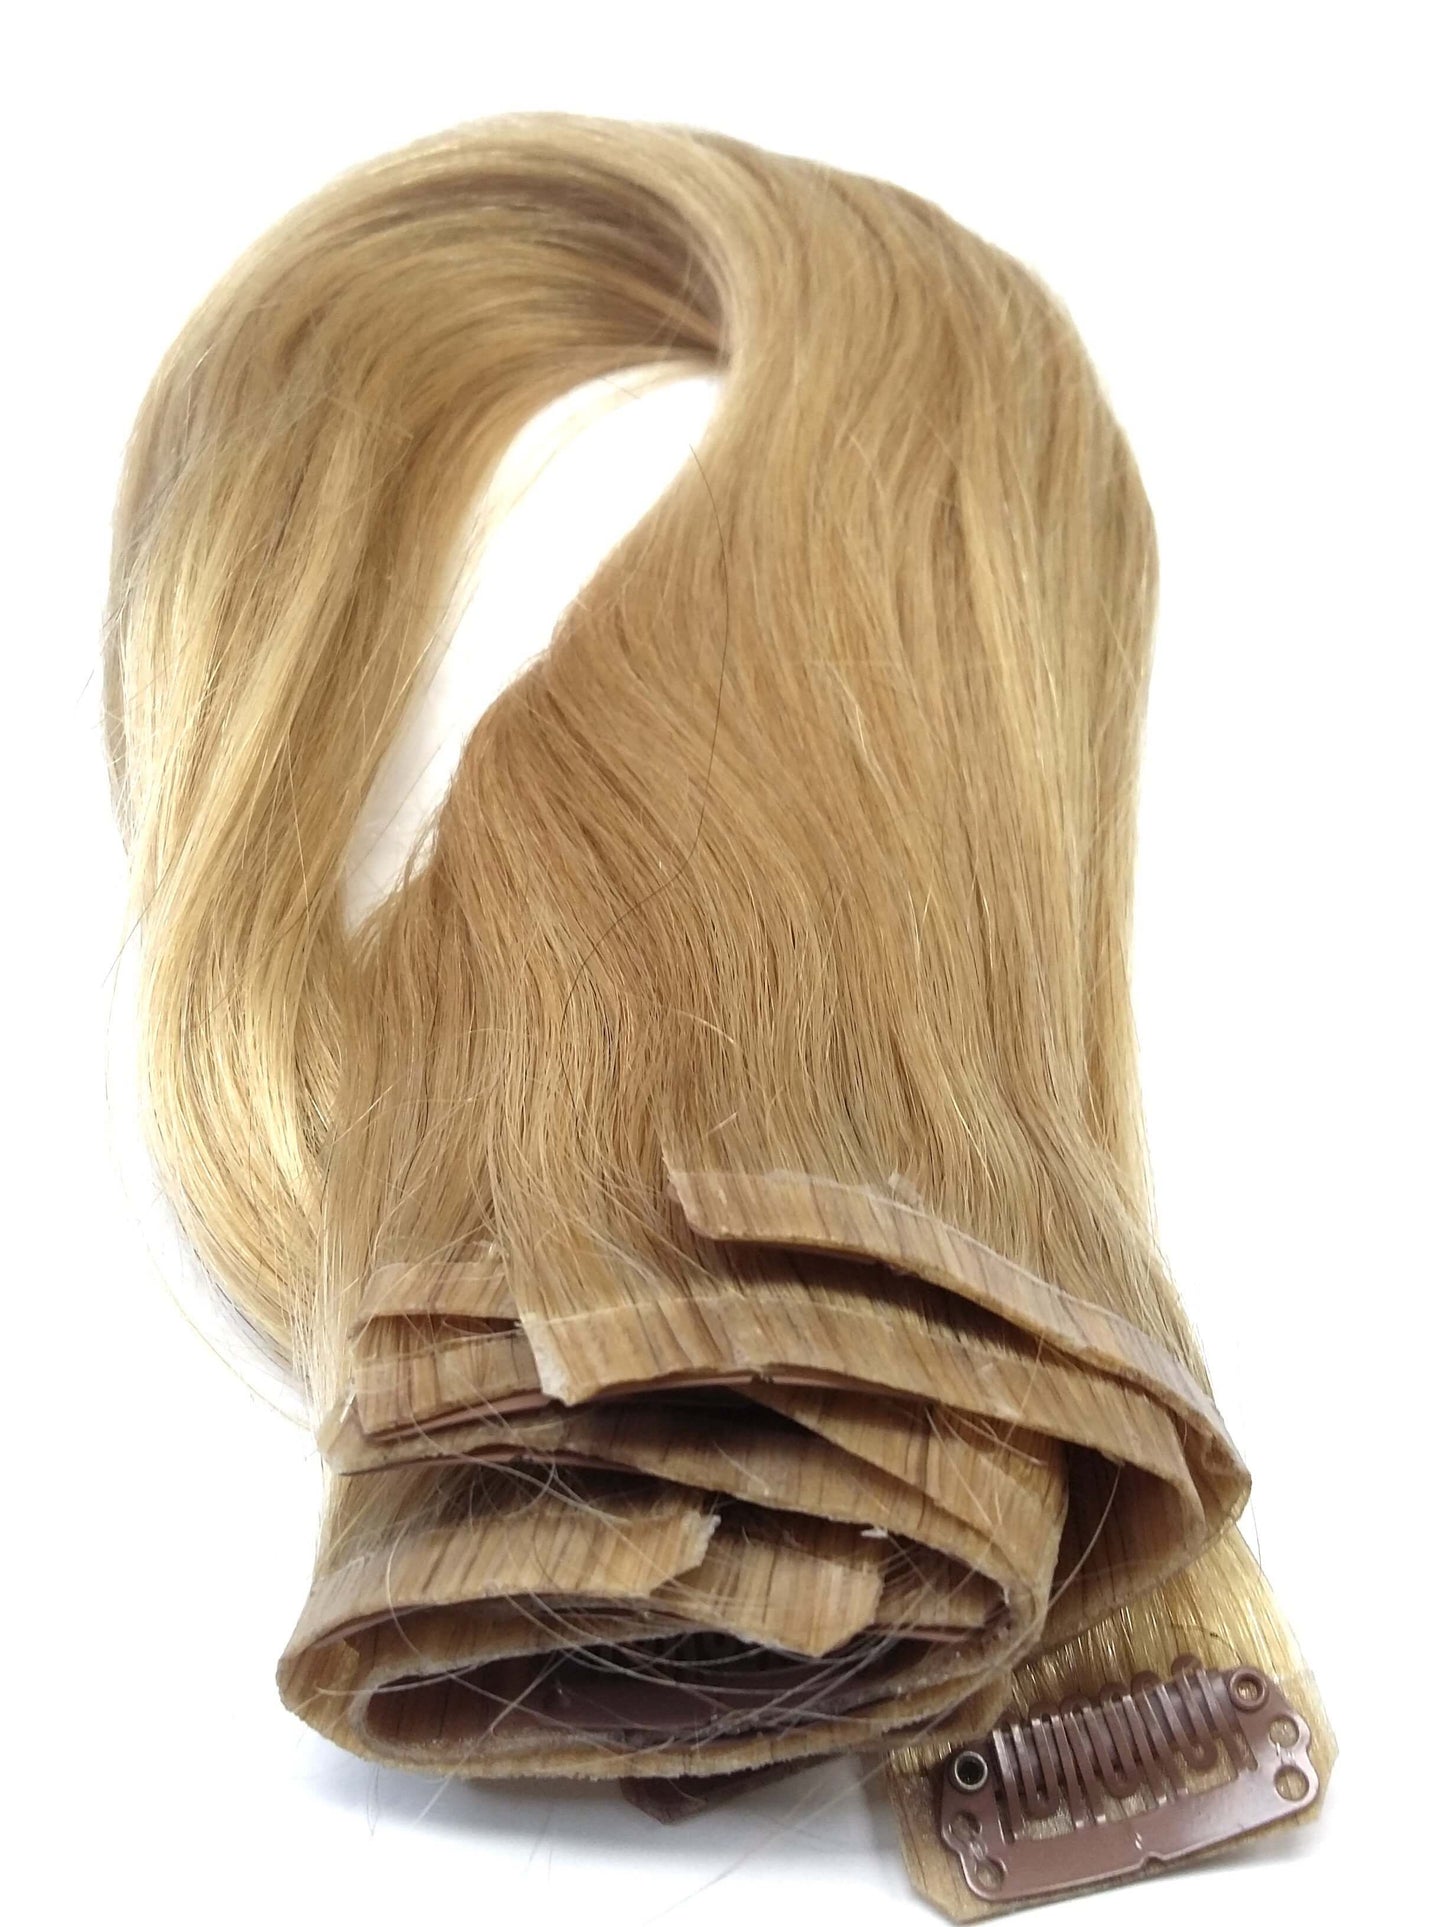 Brazilian Virgin Remy Human Hair - PU Clip In Extensions, 20'', Rak, Färg 24 ,100 g - Snabb leverans